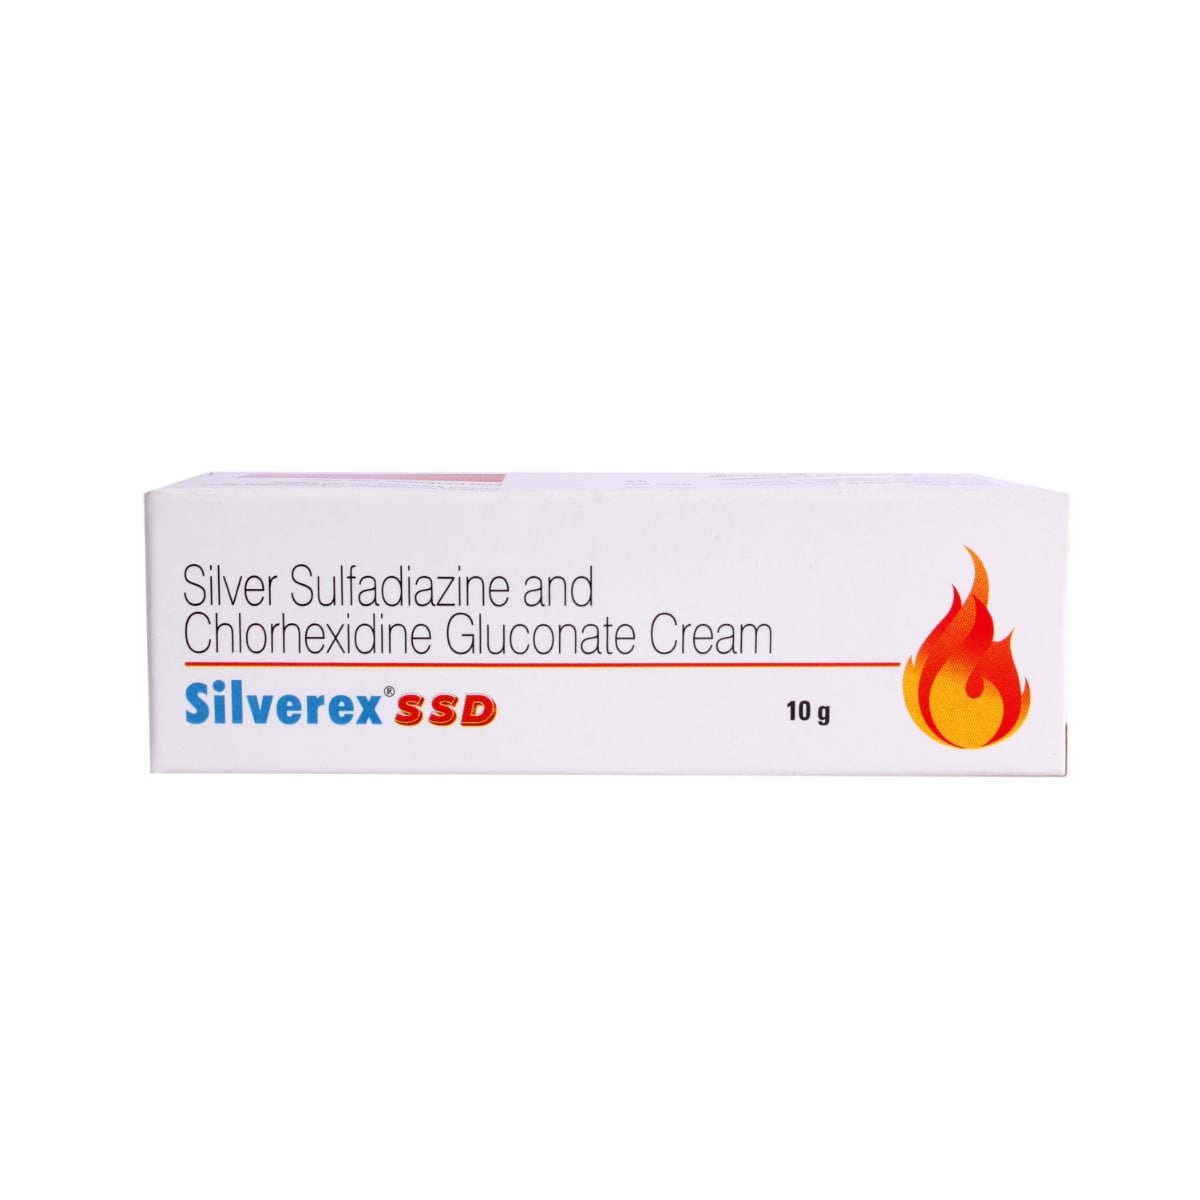 Silverex SSD Cream 10 gm, Pack of 1 CREAM